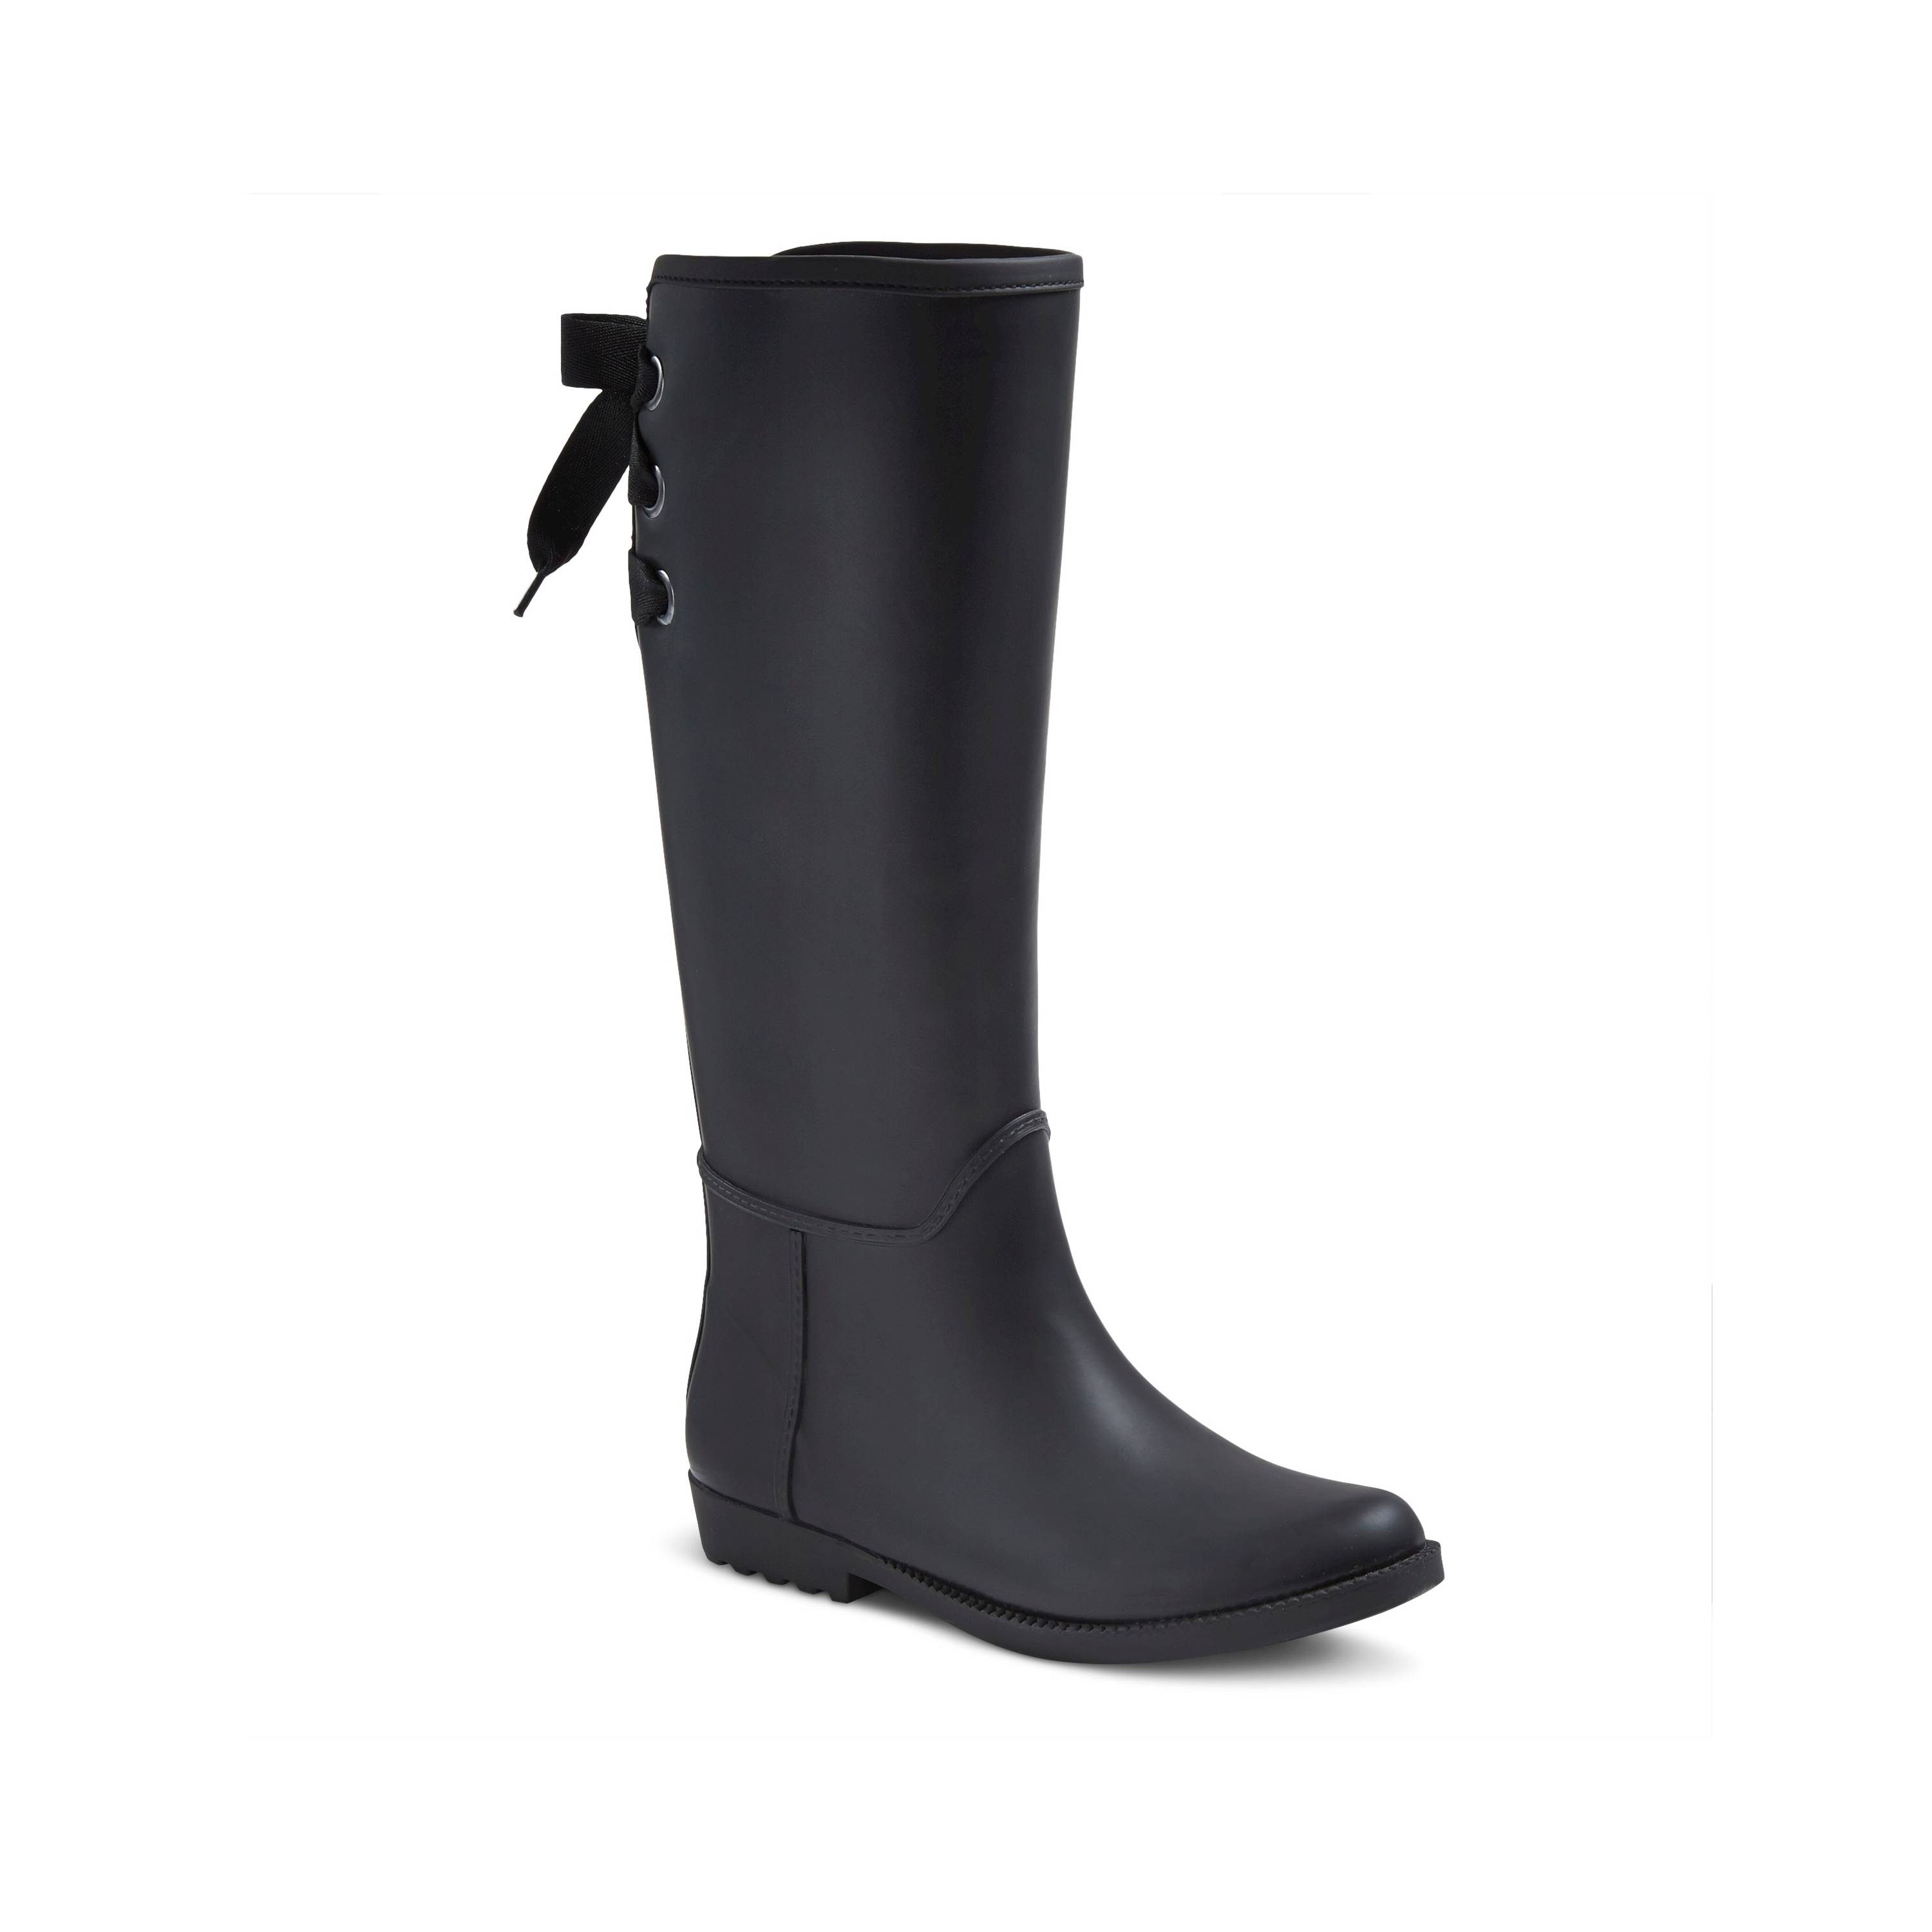 Merona from Target 'Kyra' Rain Boots